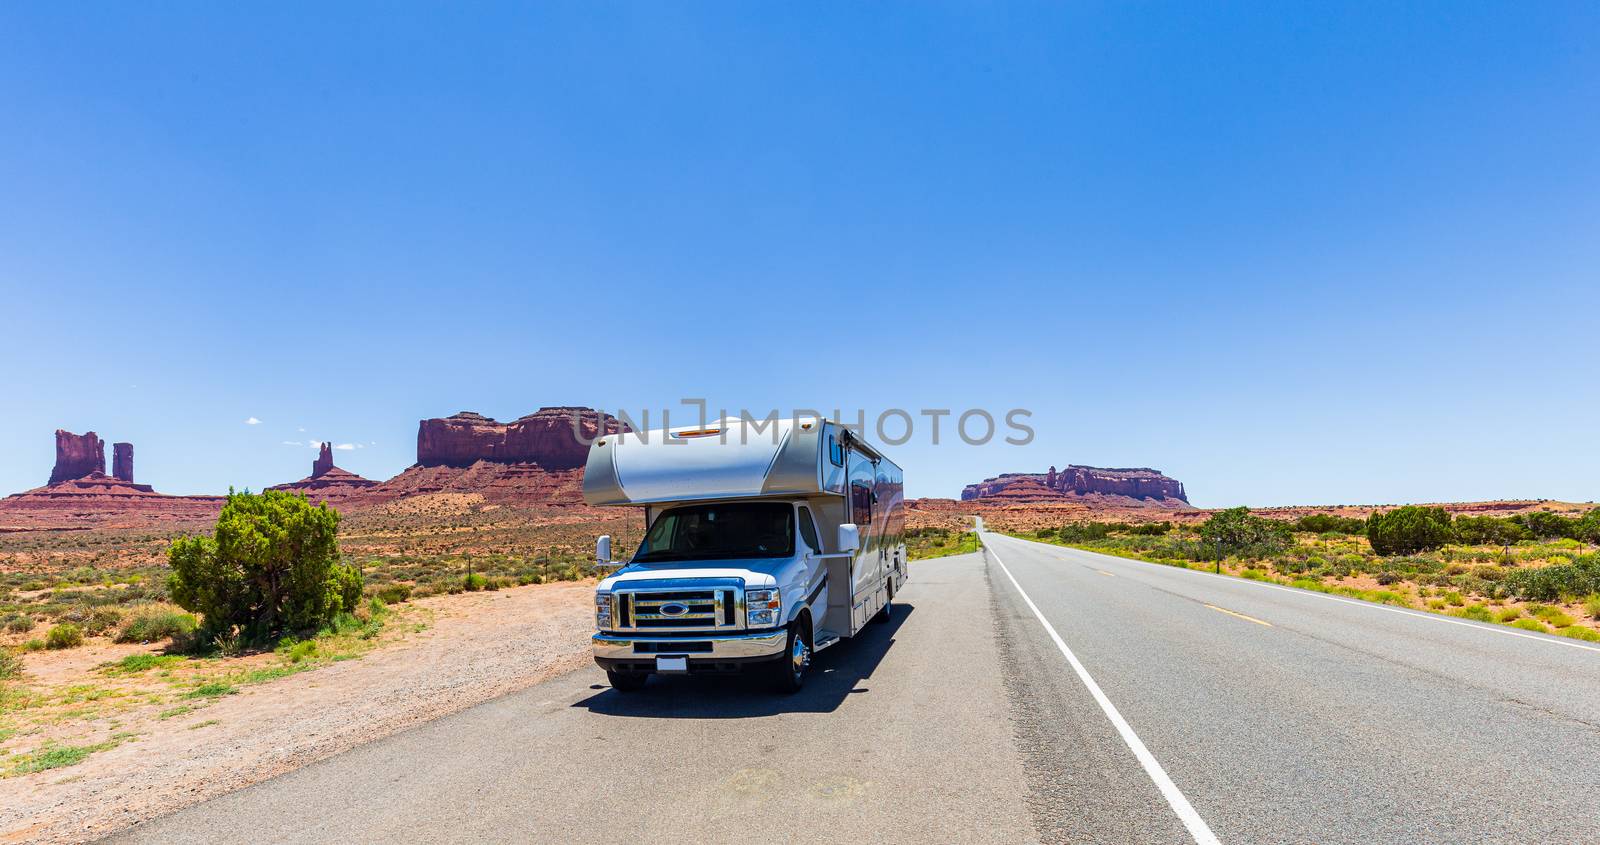 Camper Van on scenic drive in Monument Valley Navajo Park, Utah, USA